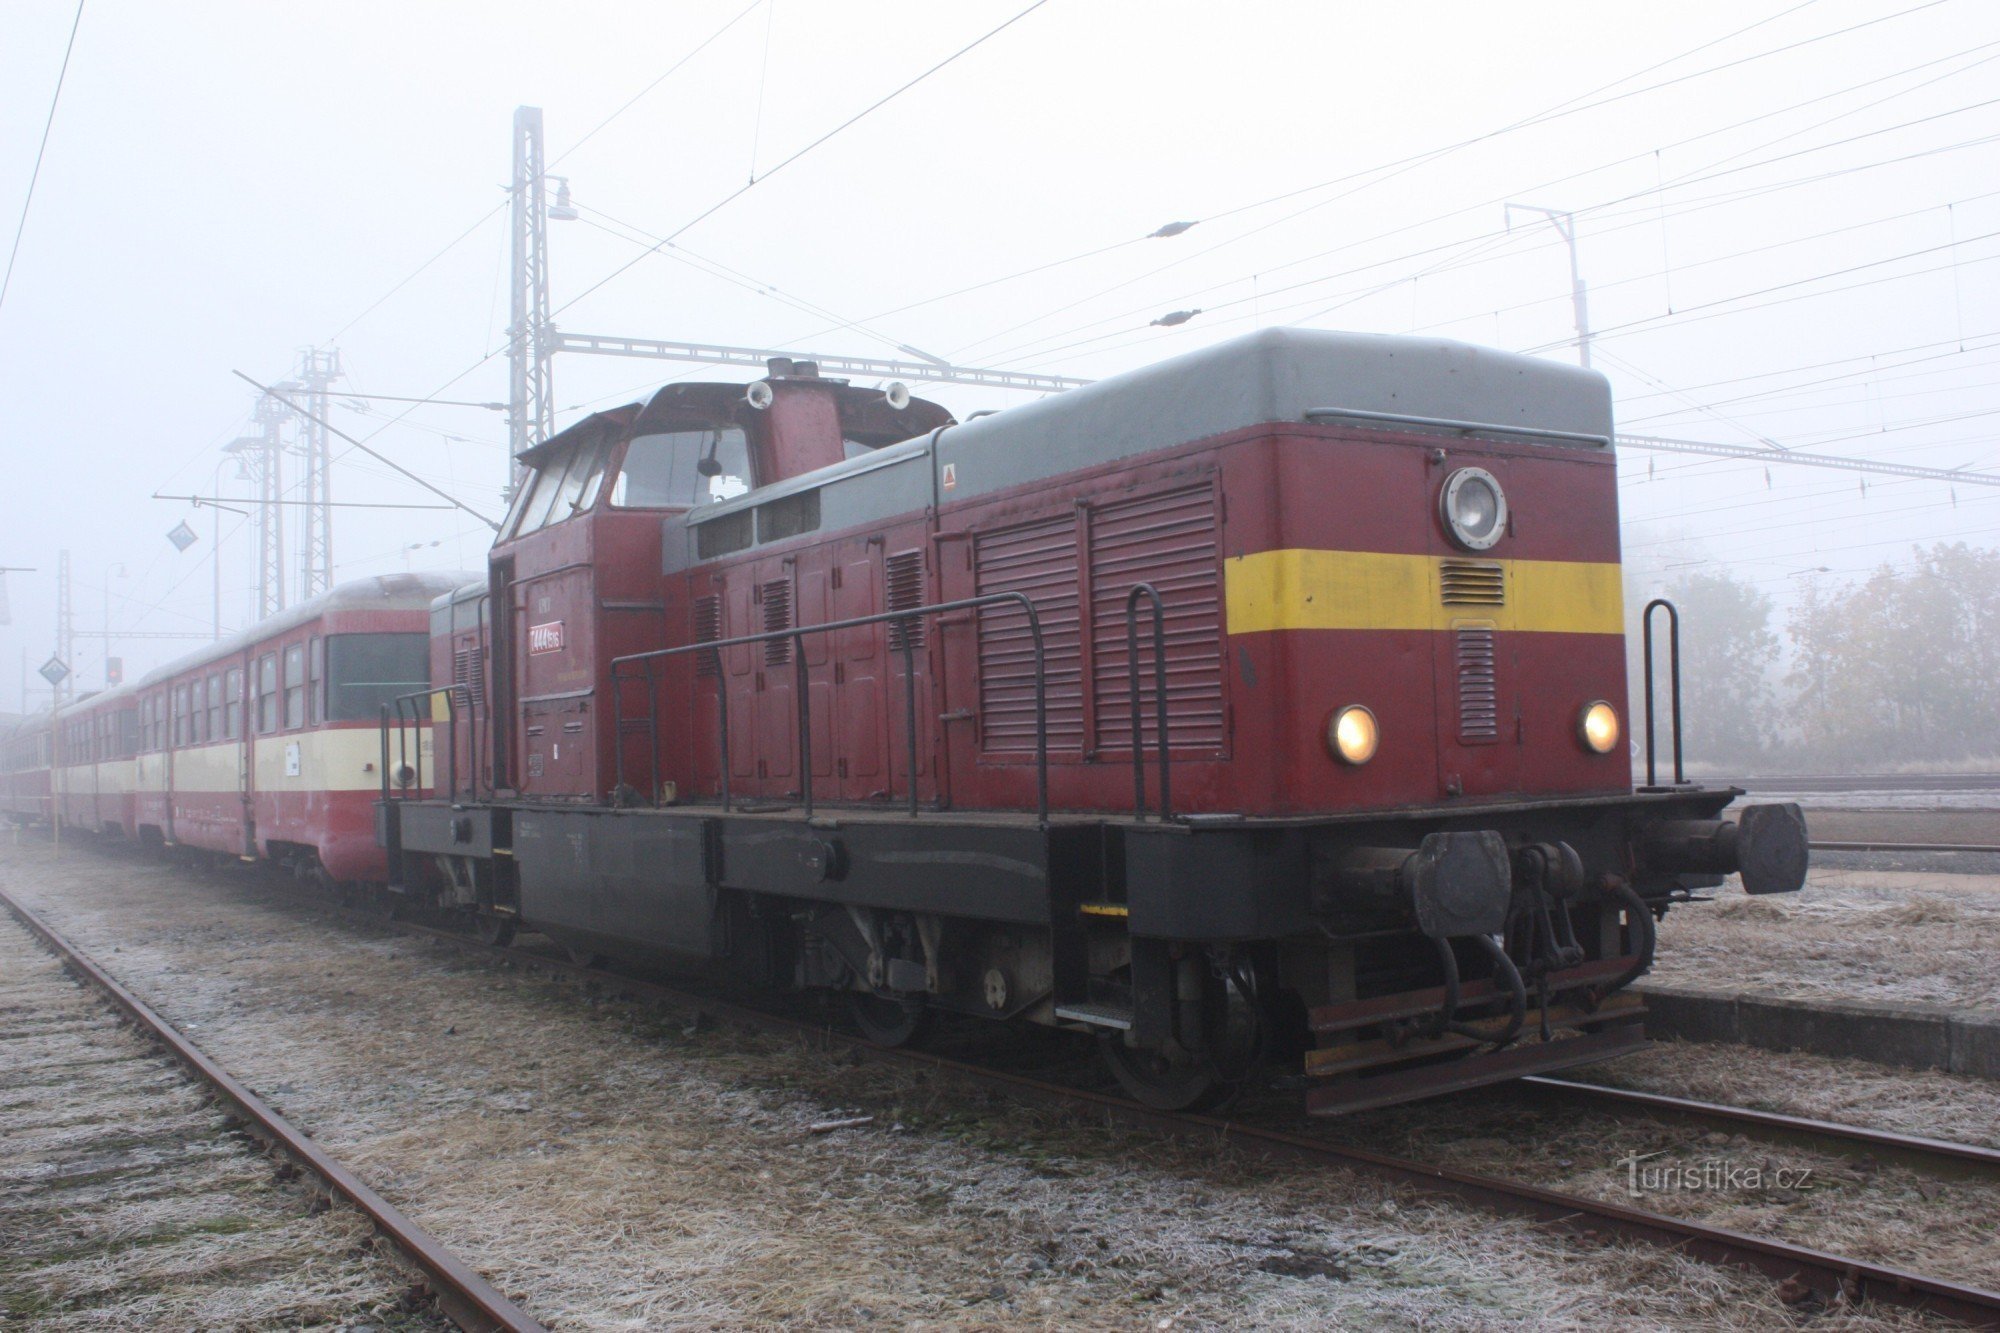 locomotora diésel-hidráulica T444.1516 apodada Caperucita Roja